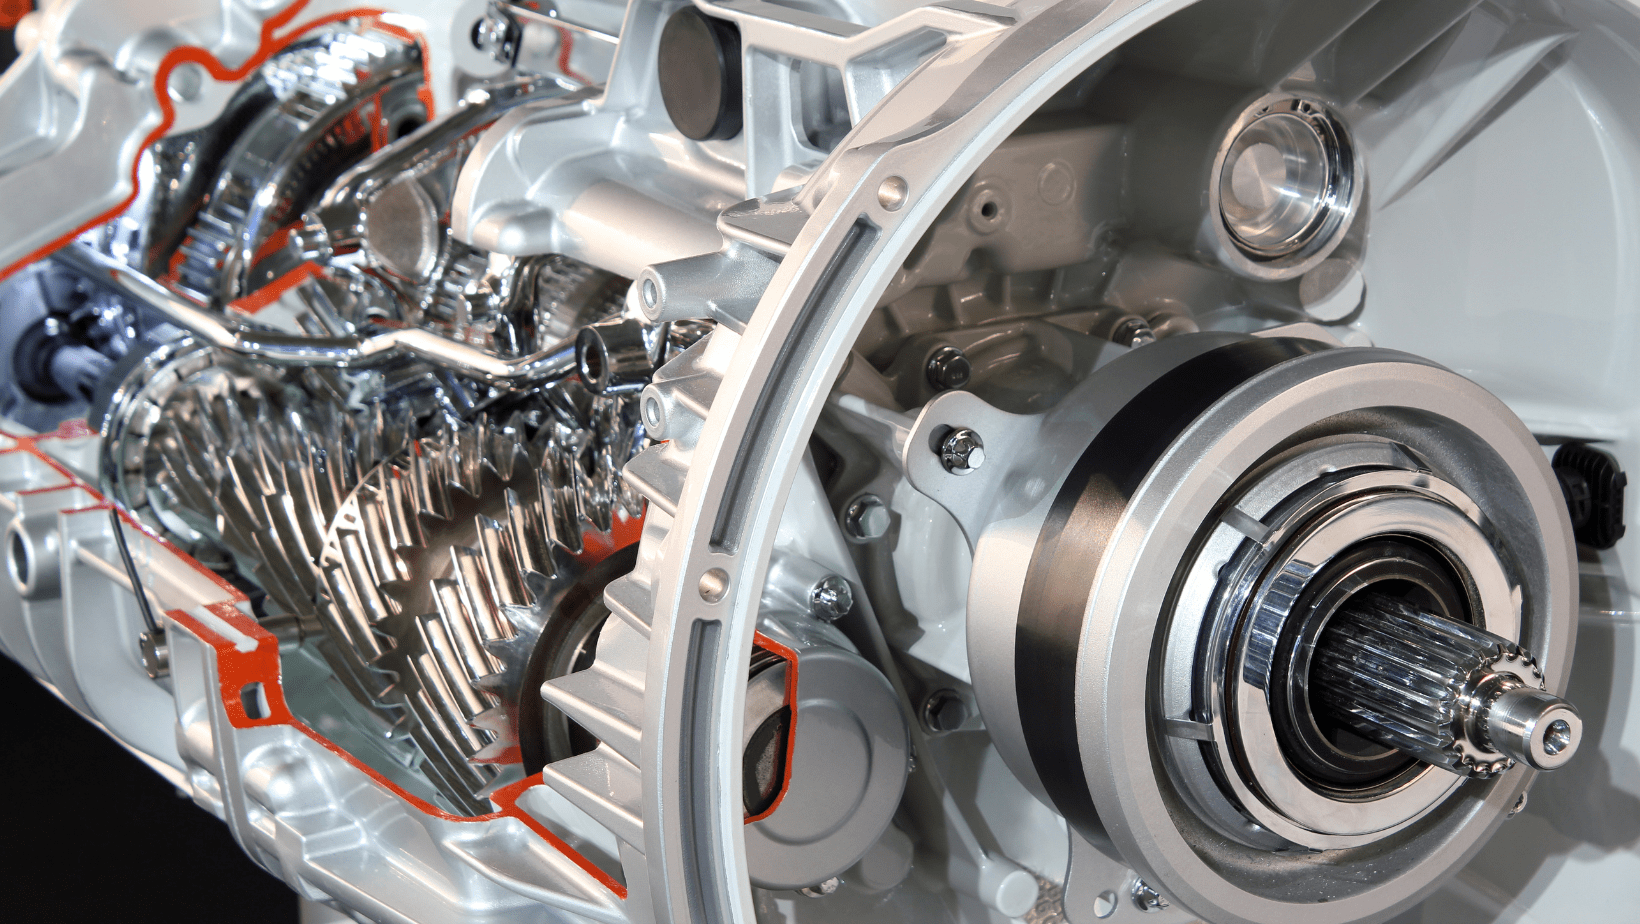 Basics of transmission repair: a gear box